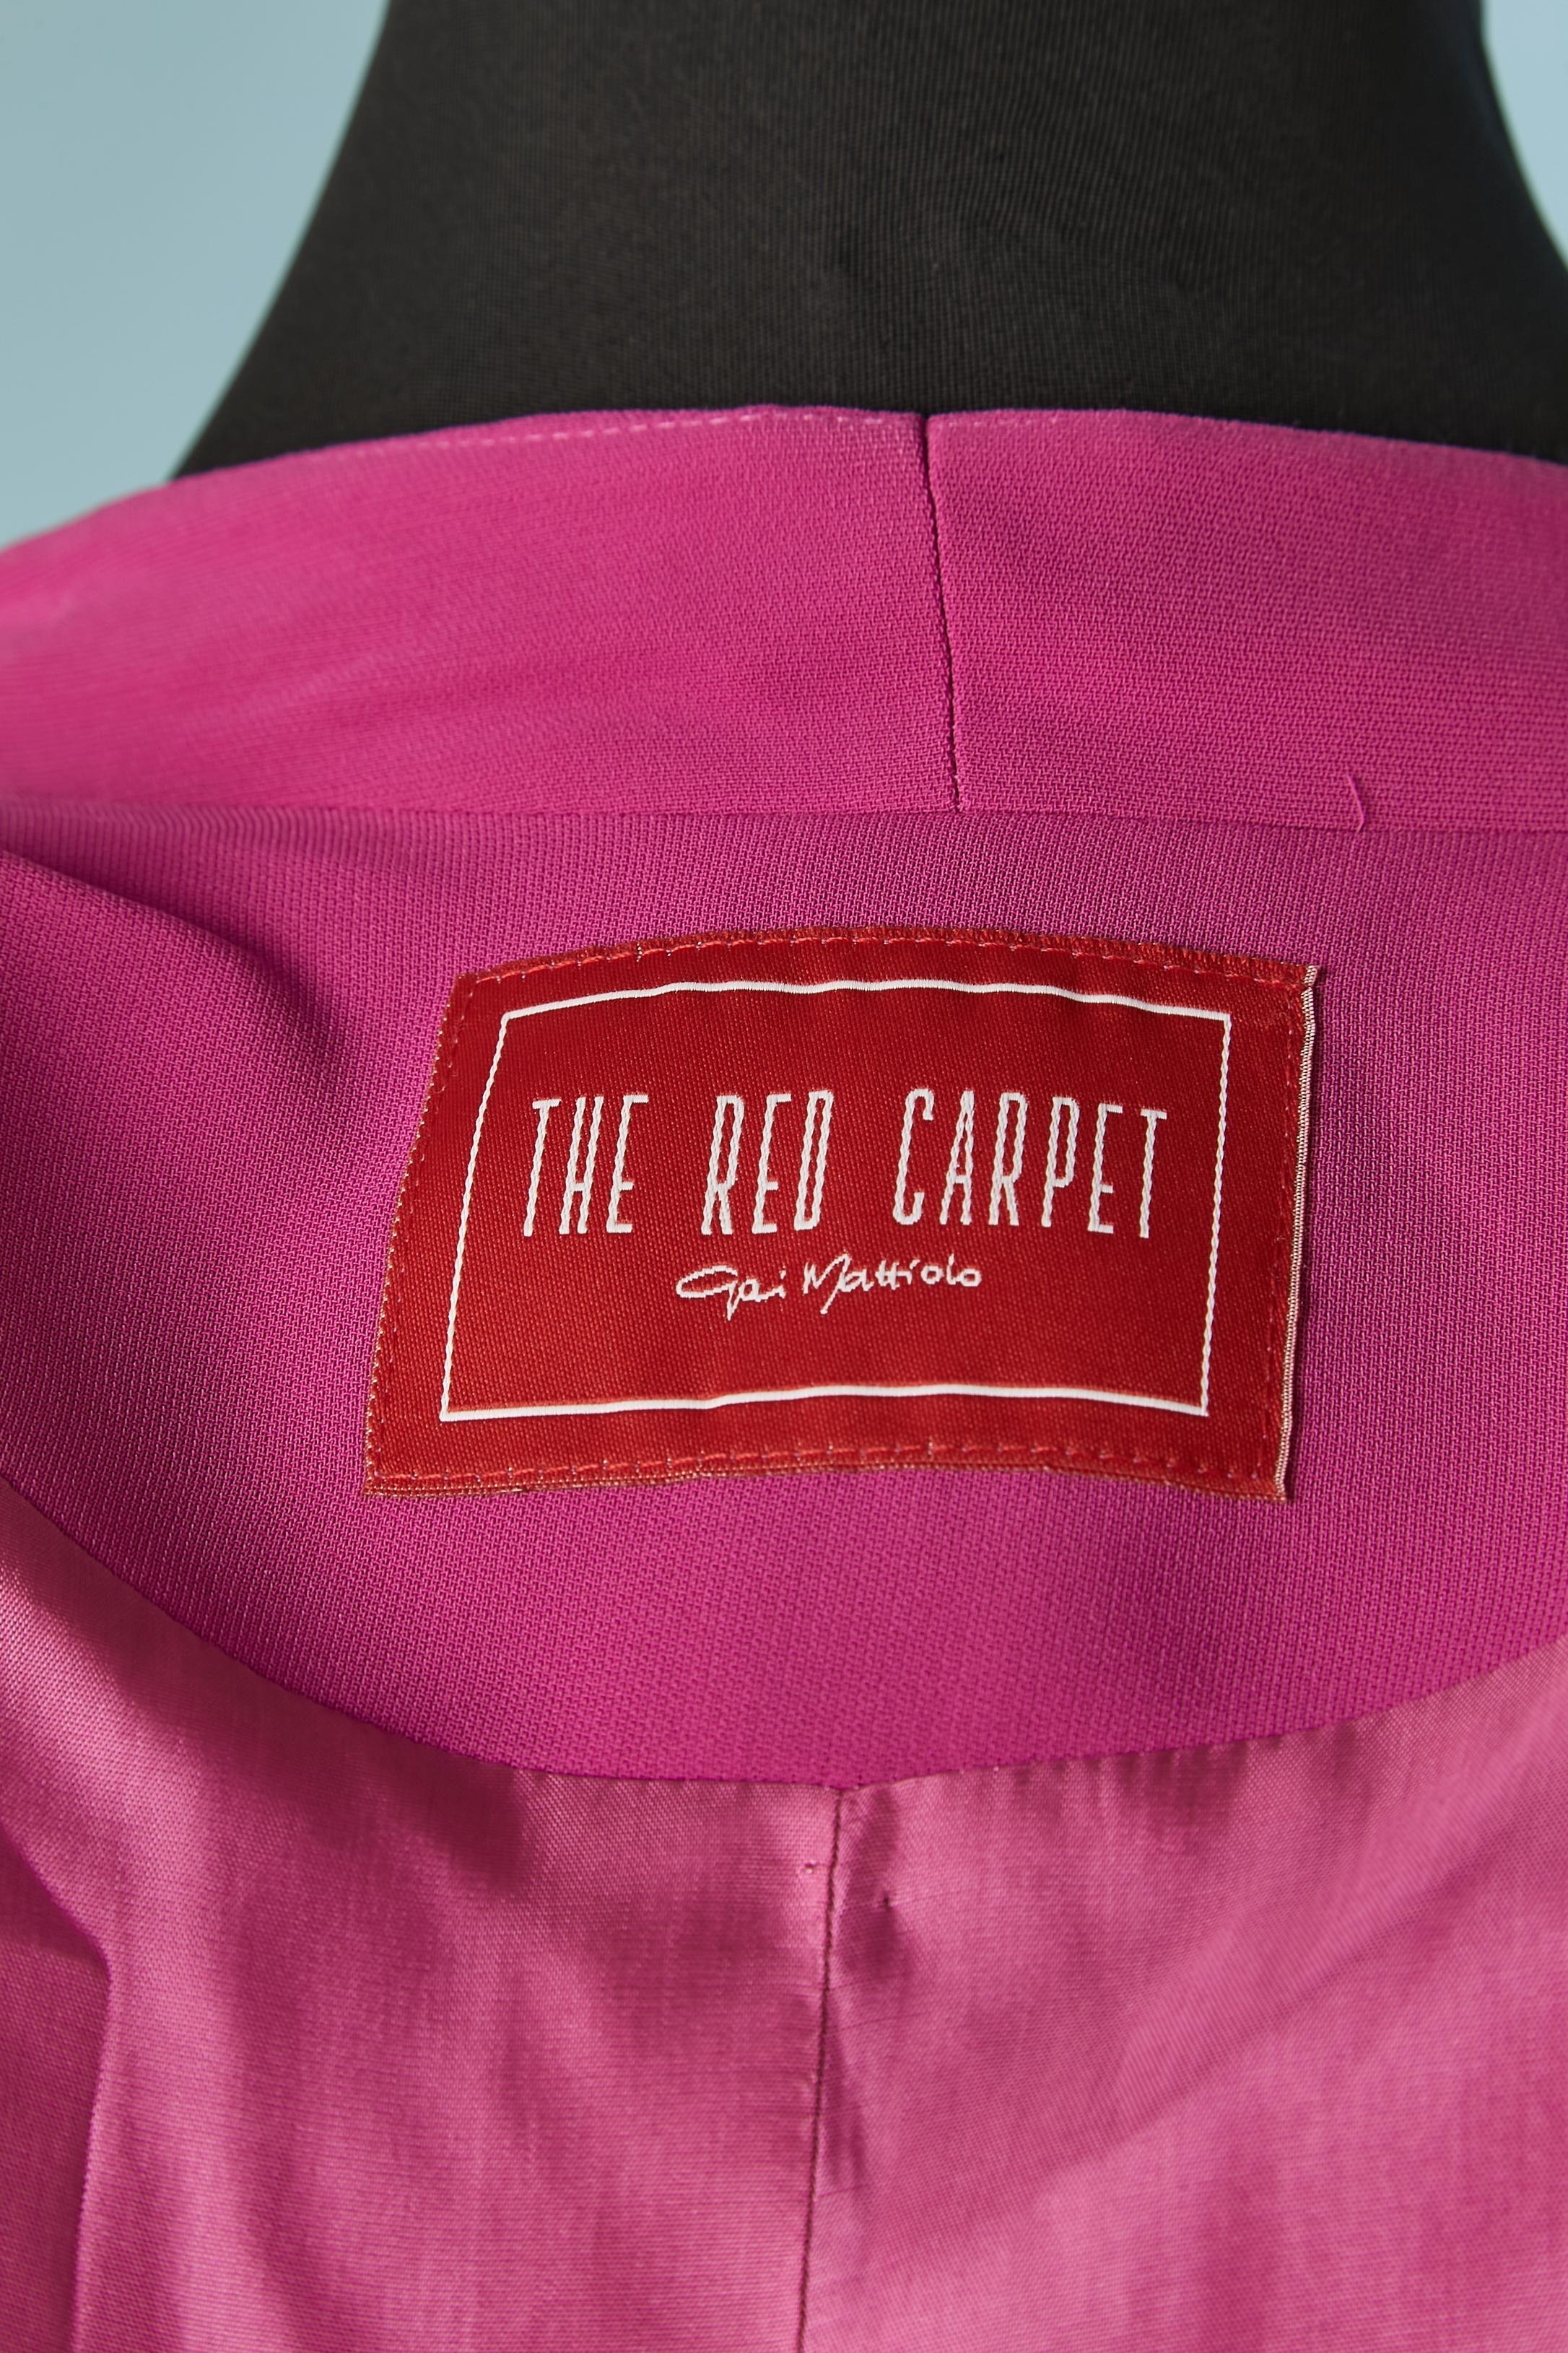 Fushia jacket with rhinestone and dress ensemble Gai Mattiolo The Red Carpet  For Sale 2